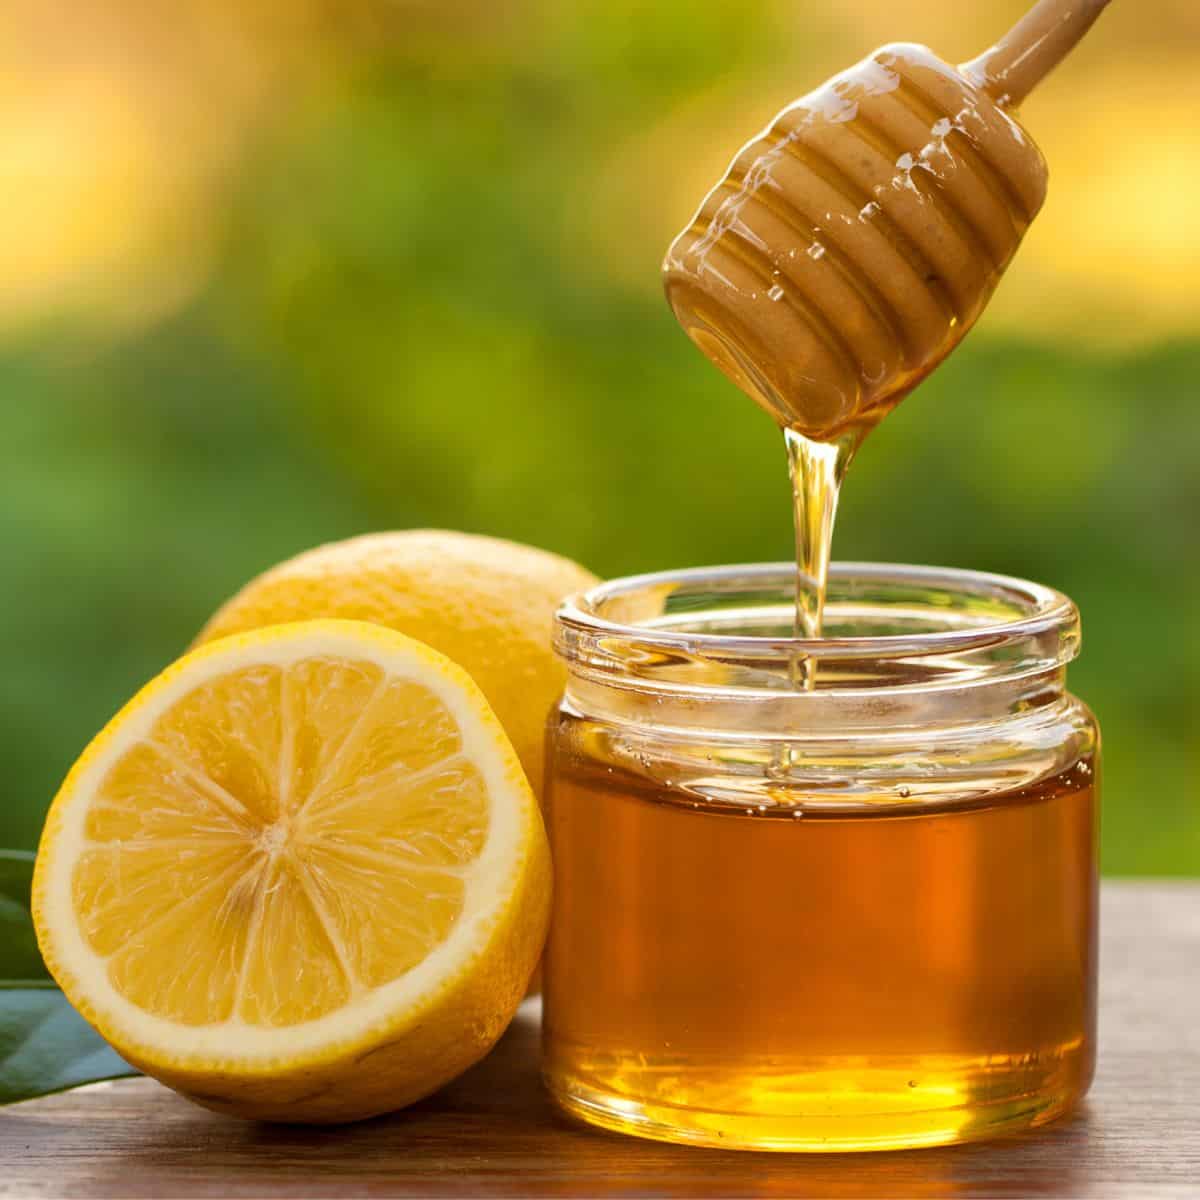 Honey wand dipped in jar of honey beside a lemon cut in half. 
